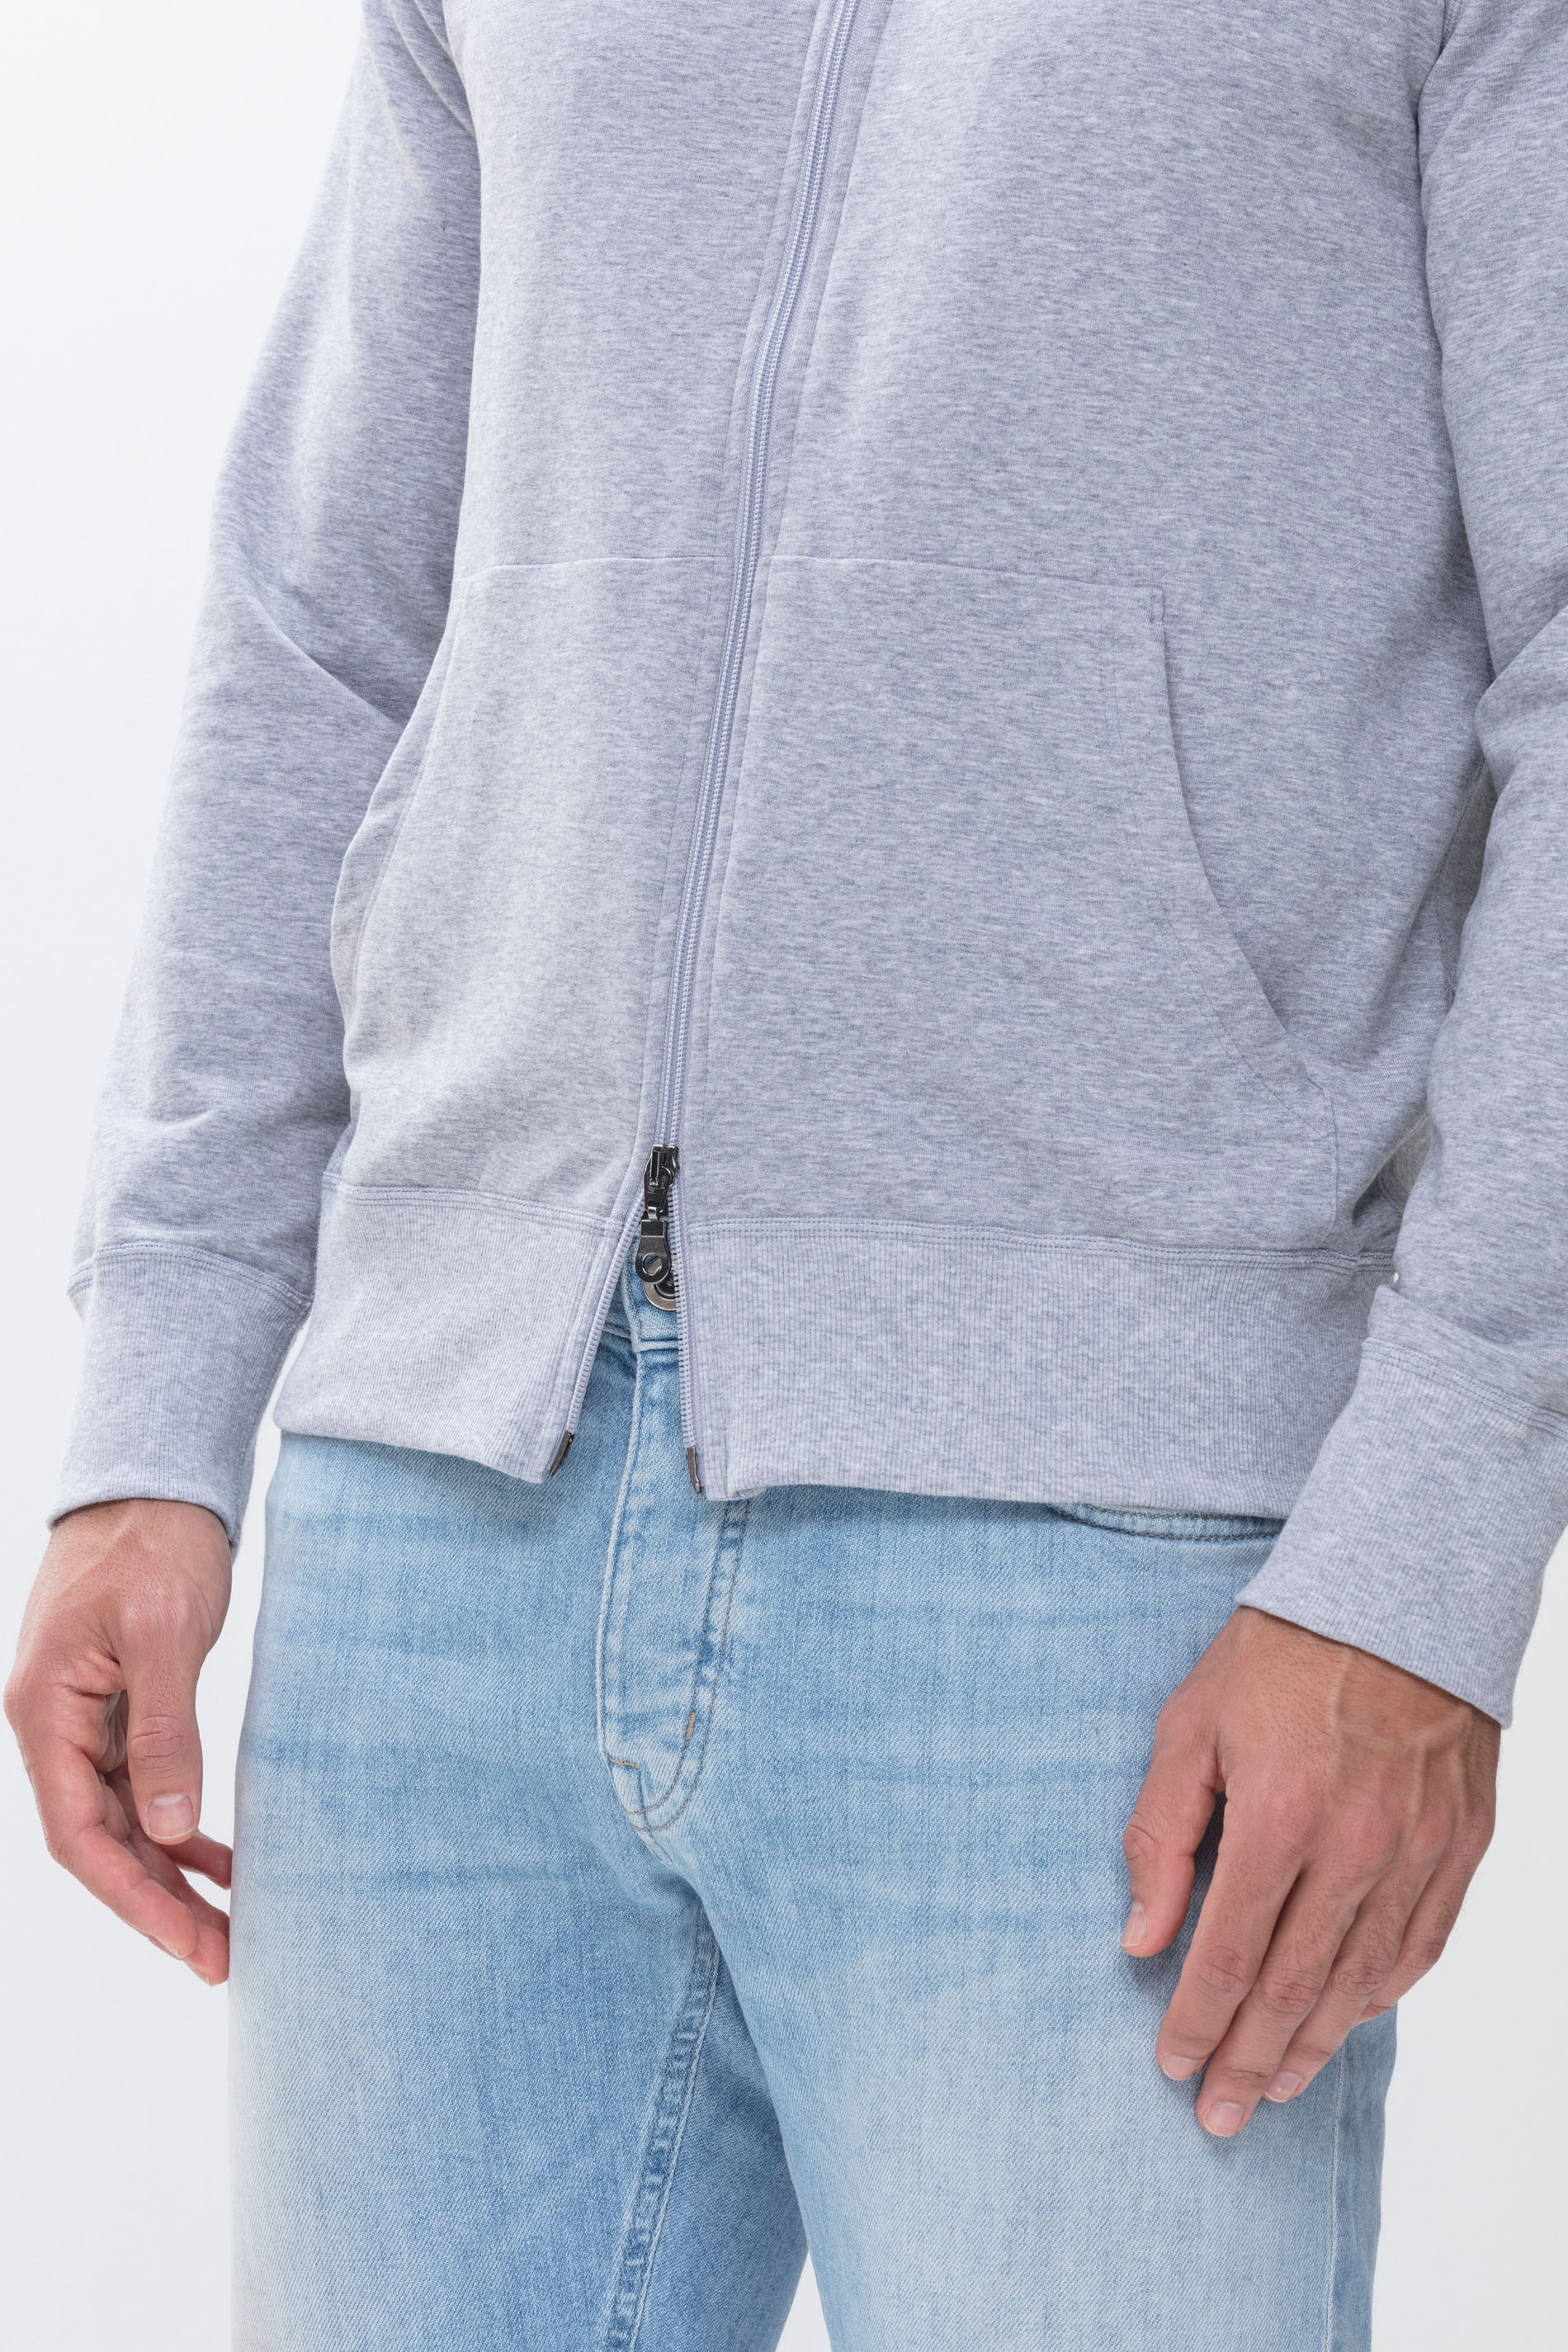 Sweat jacket with zip Light Grey Melange Serie Enjoy Detail View 01 | mey®